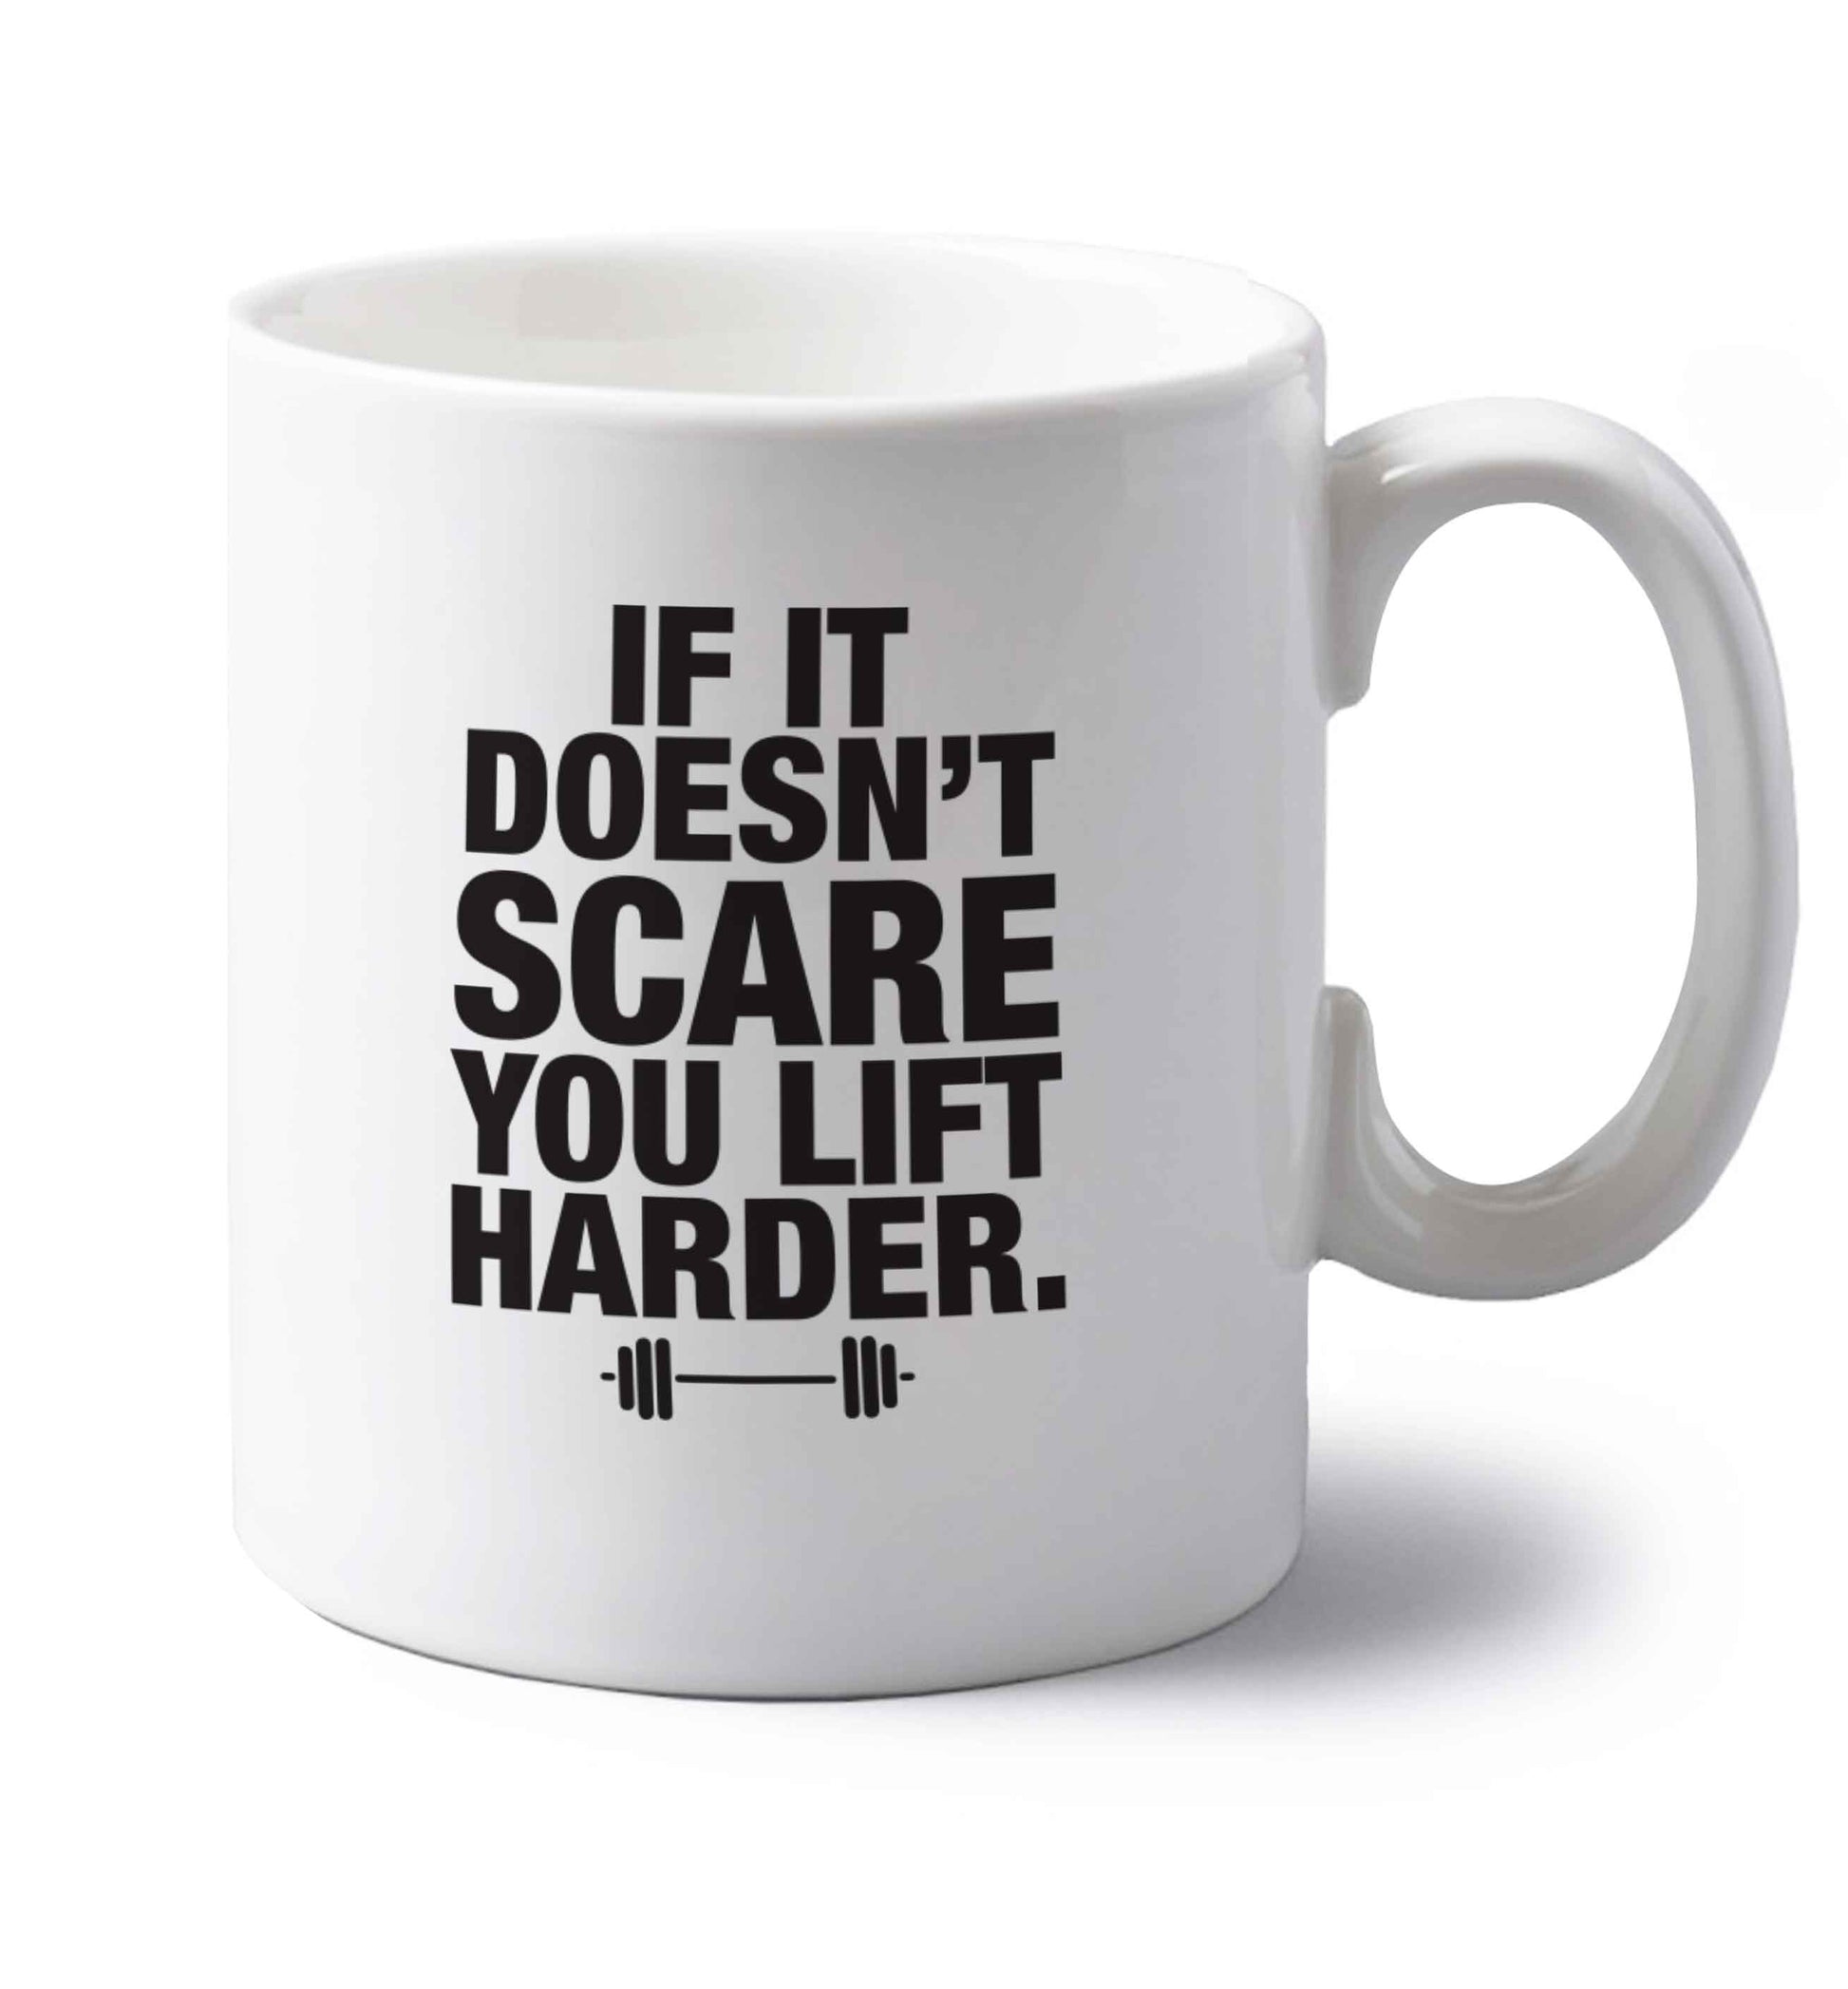 If it doesnt' scare you lift harder left handed white ceramic mug 